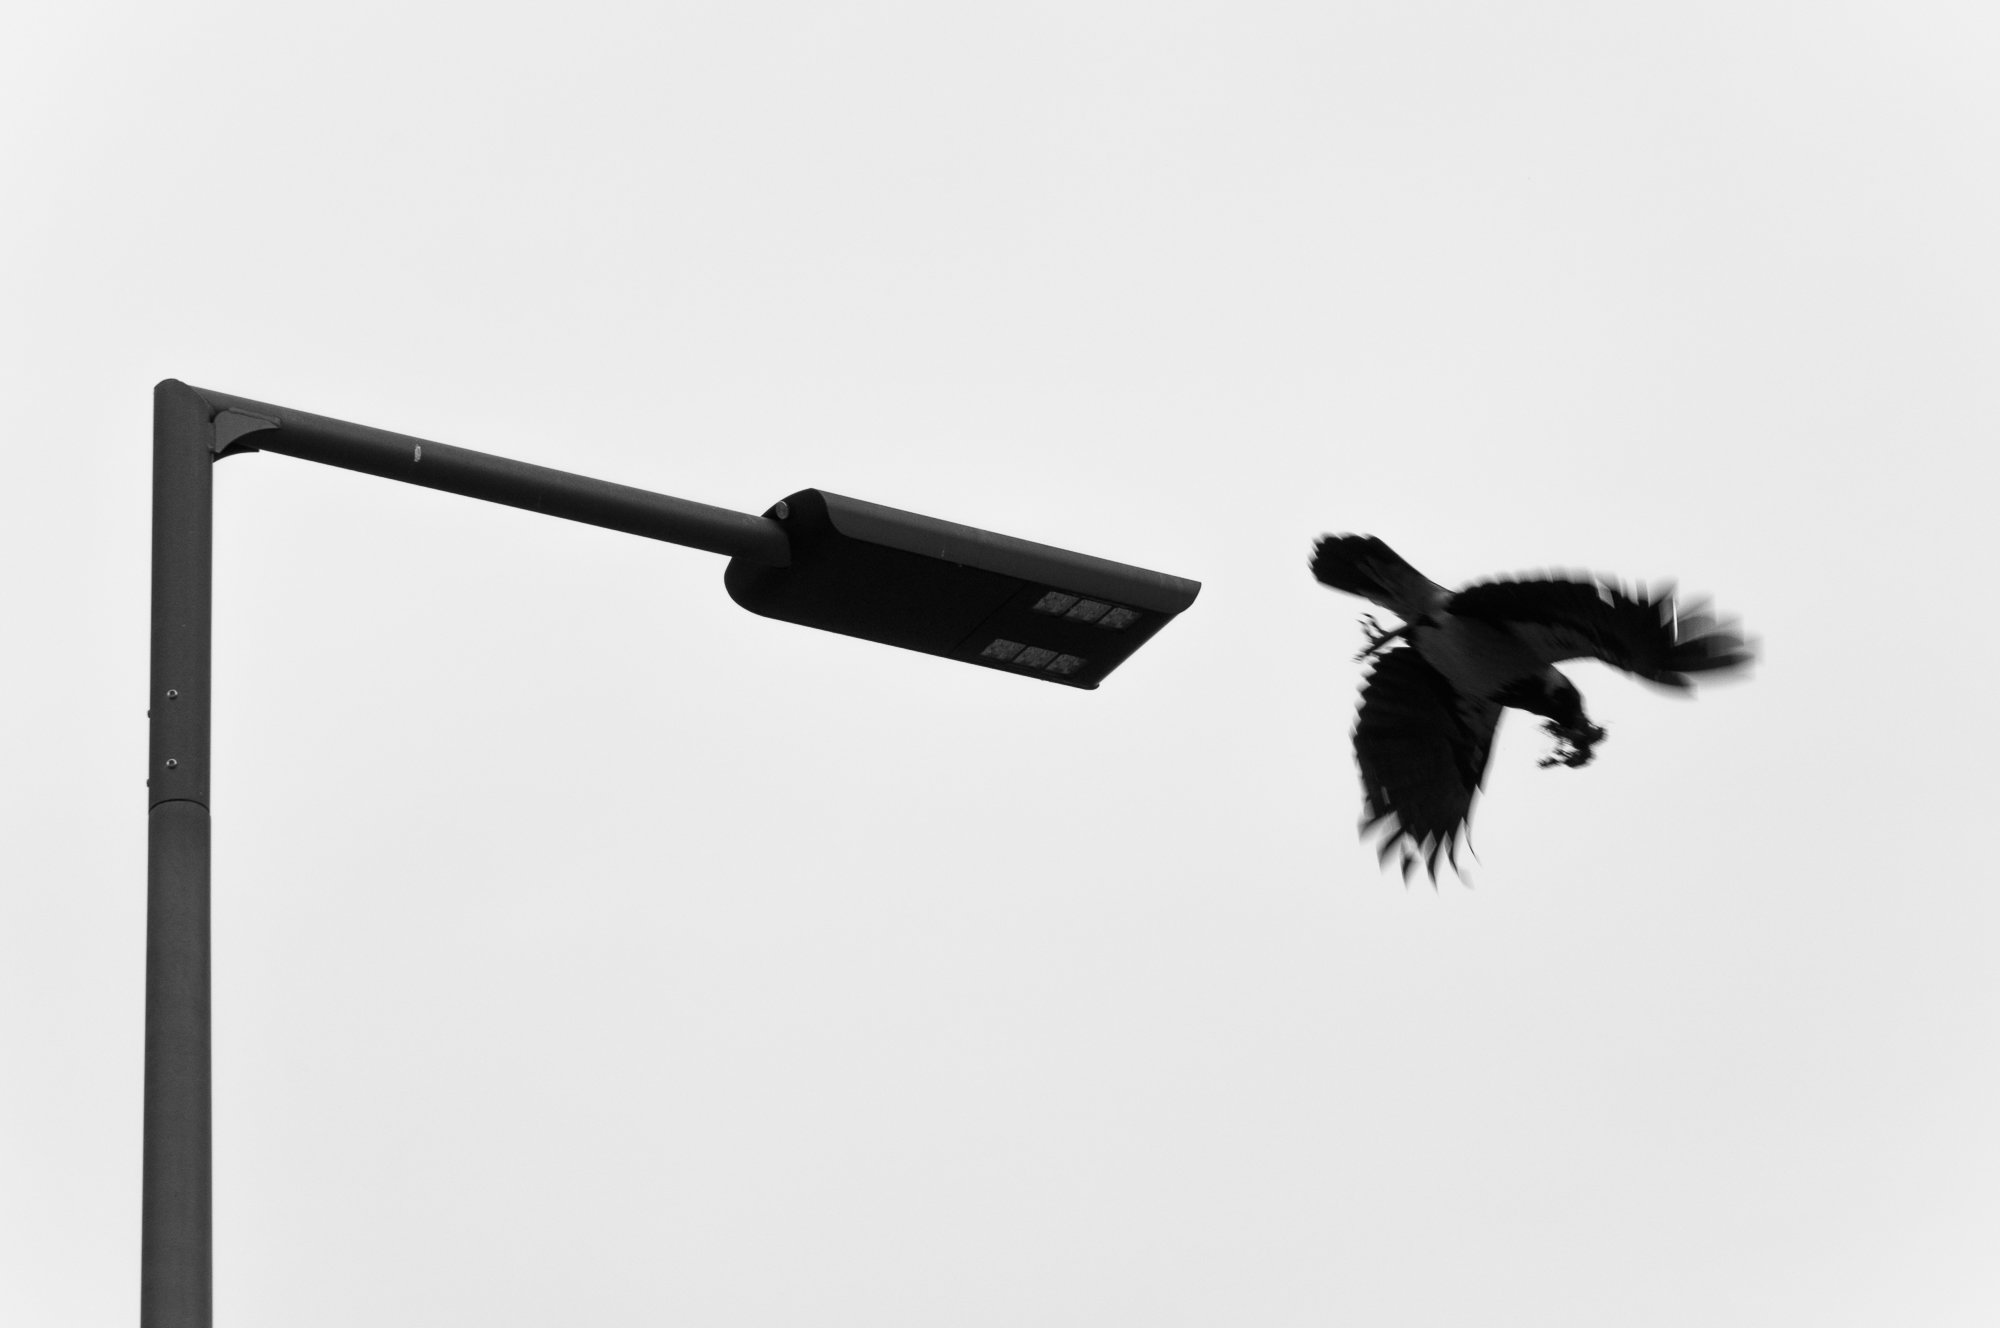 Adam Mazek Photography Warsaw (Warszawa) 2020. Post: "The best music for walking." Minimalism. Flying bird and a street lamp.